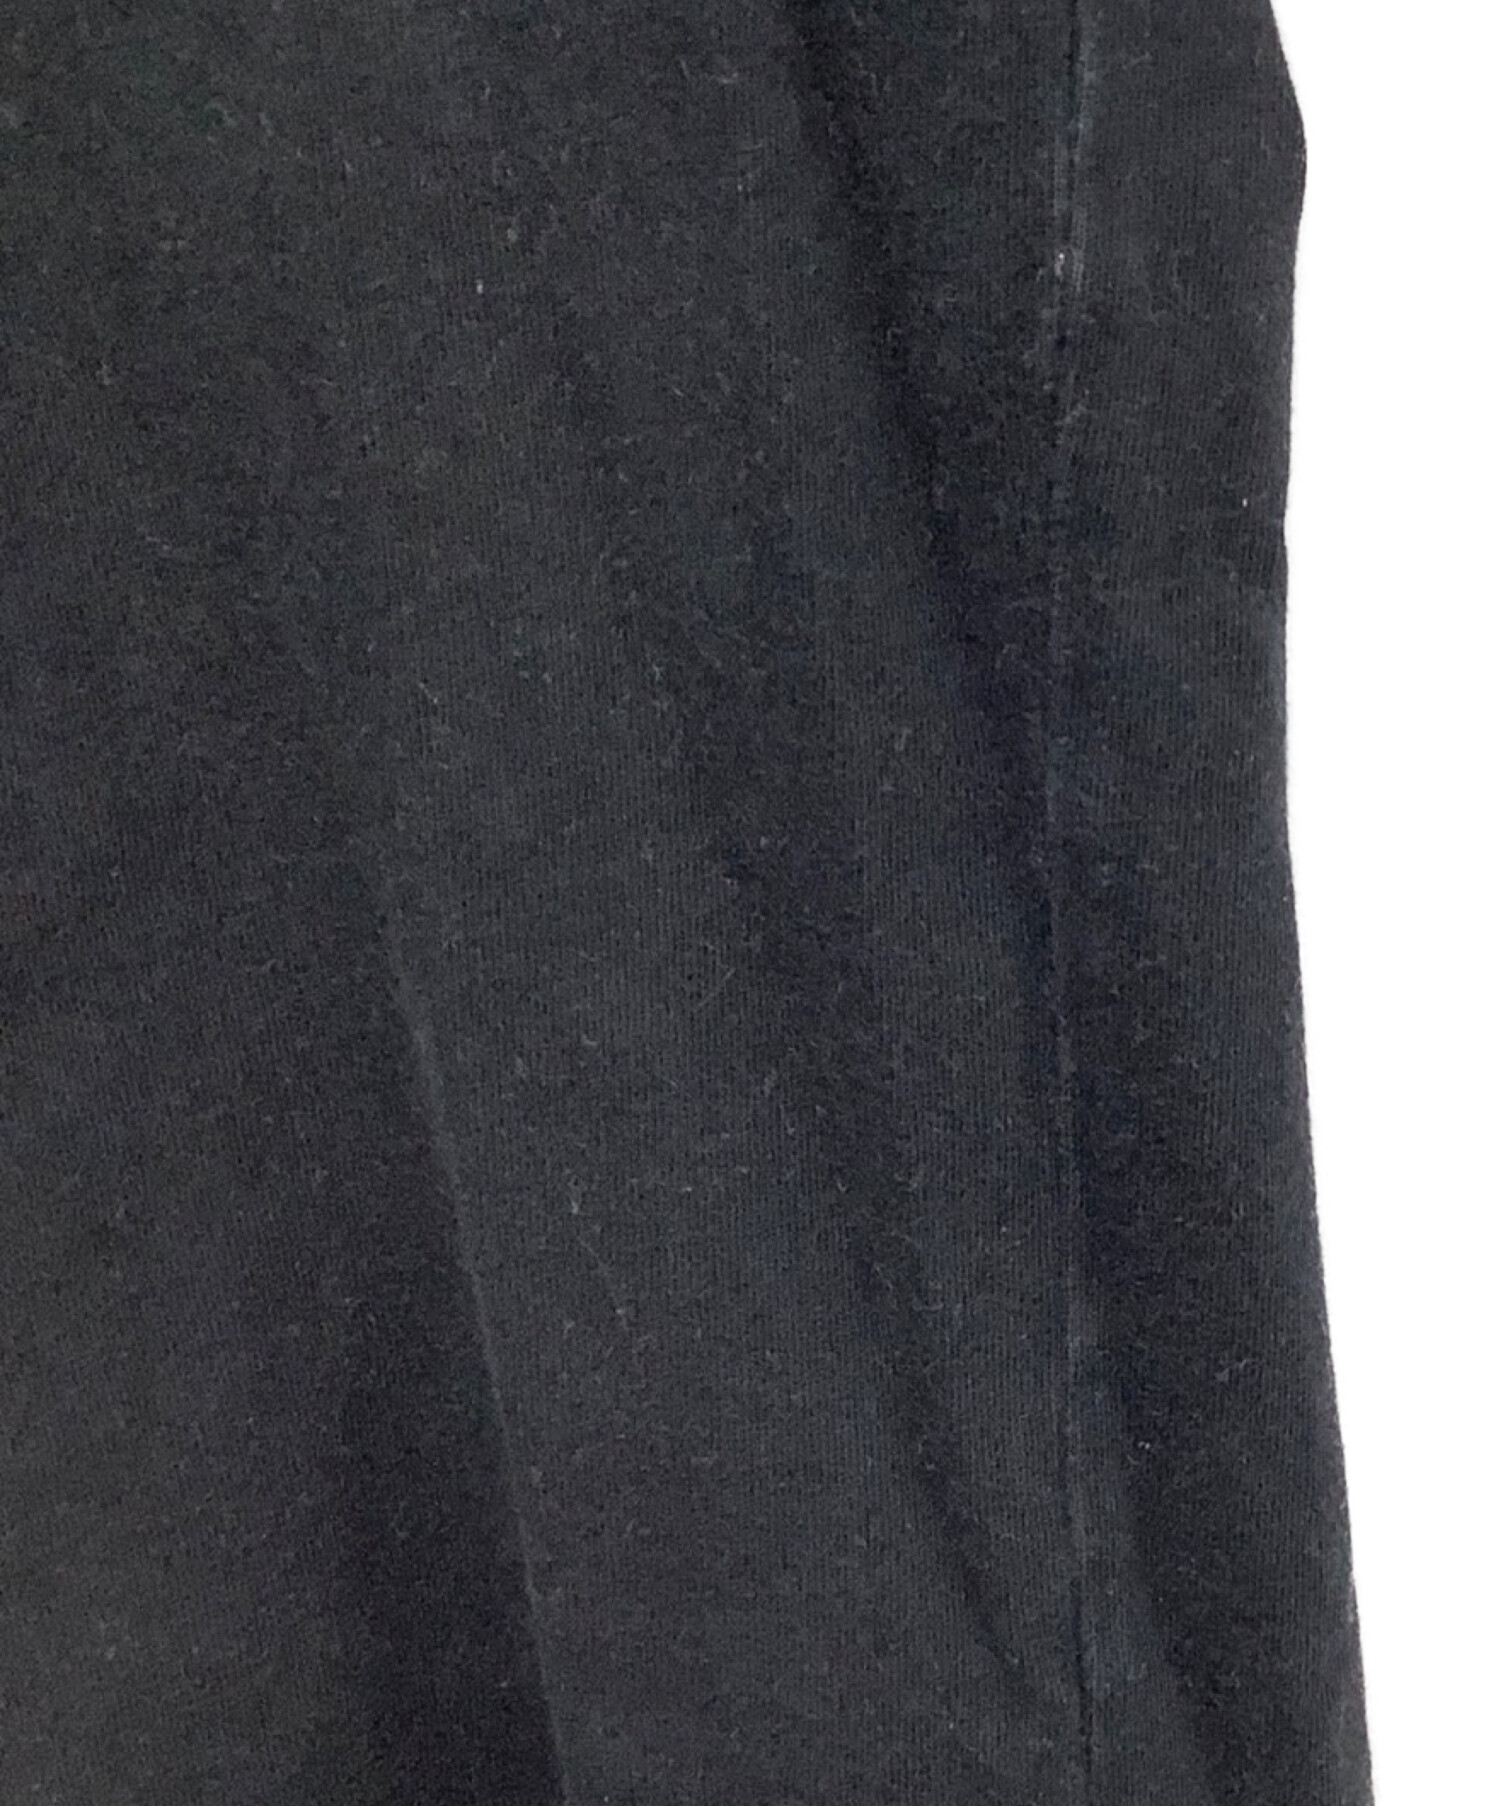 MISBHV (ミスビヘイブ) スタッズTシャツ ブラック サイズ:M